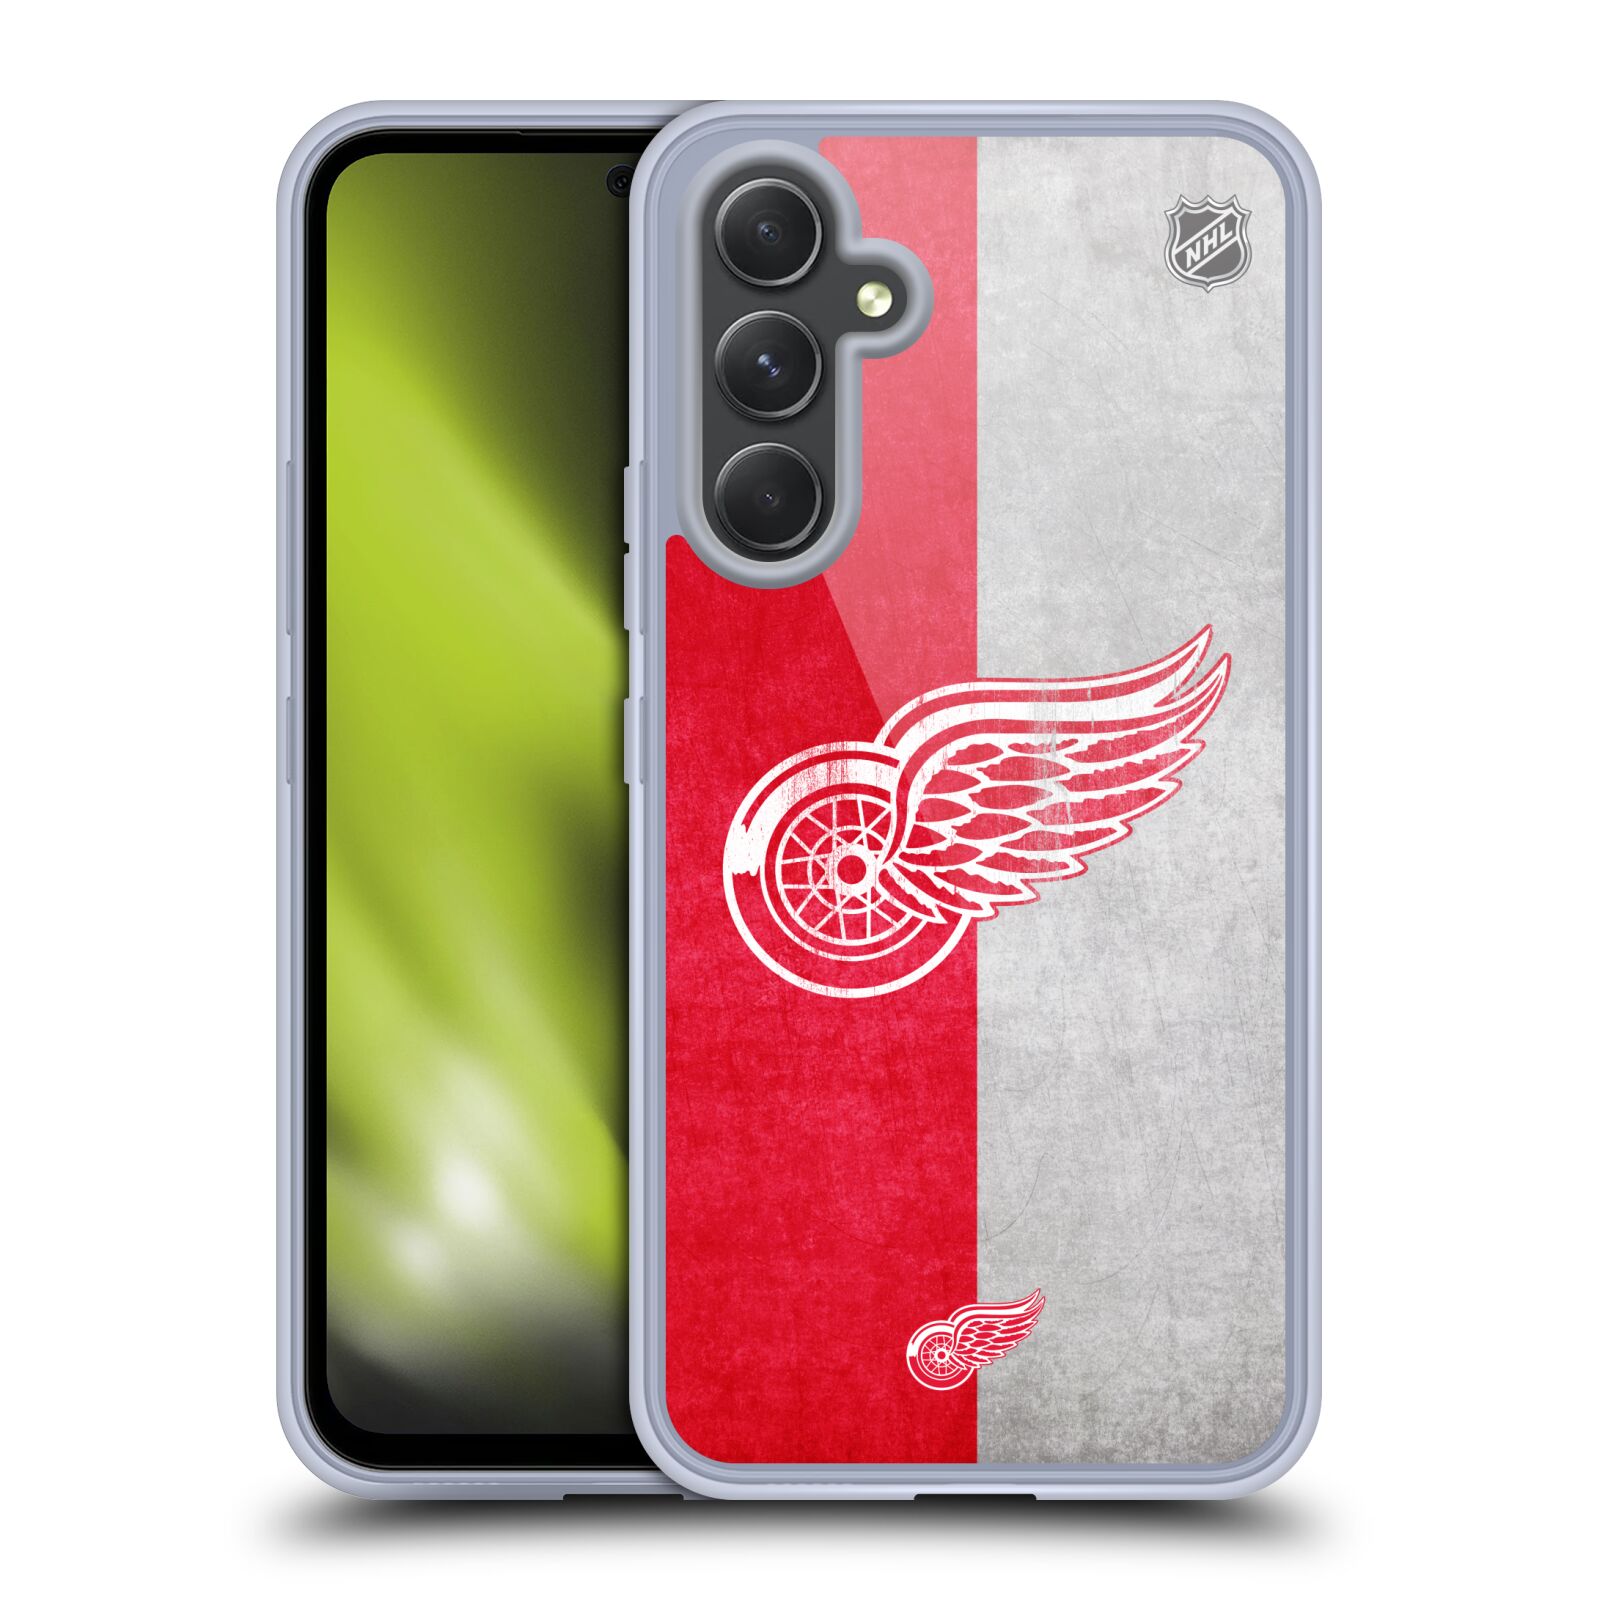 Silikonové pouzdro na mobil Samsung Galaxy A54 5G - NHL - Půlené logo Detroit Red Wings (Silikonový kryt, obal, pouzdro na mobilní telefon Samsung Galaxy A54 5G s licencovaným motivem NHL - Půlené logo Detroit Red Wings)